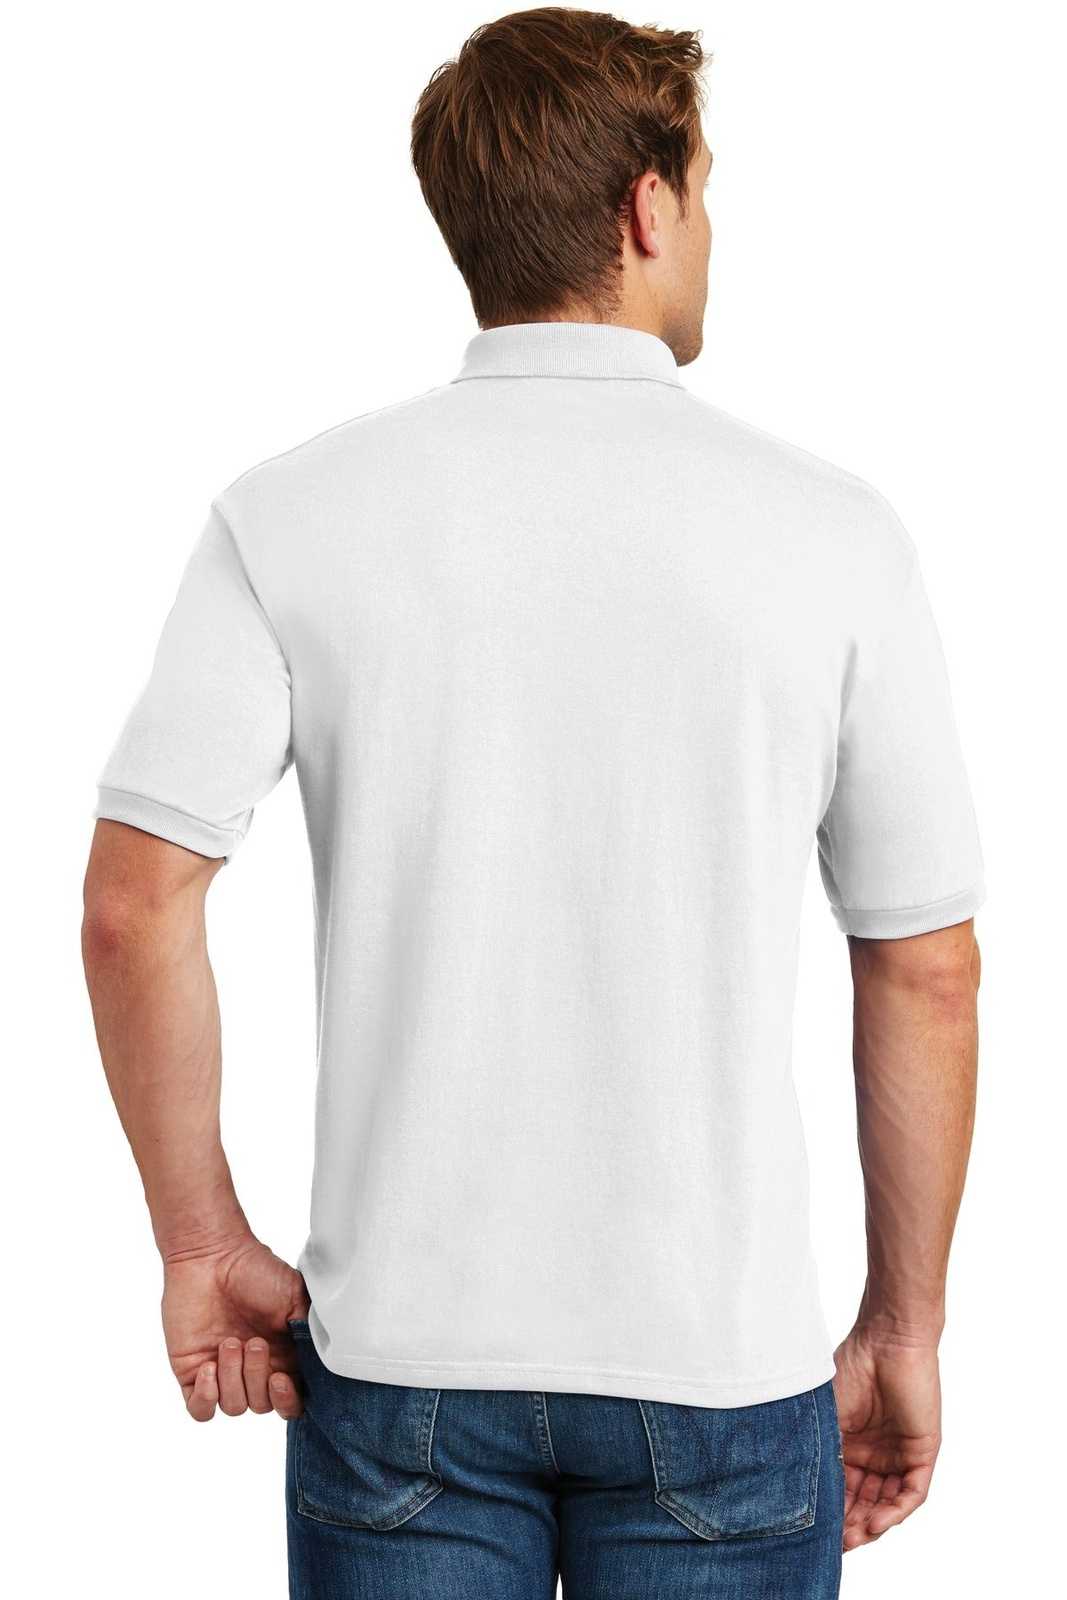 Hanes 054X Ecosmart 5.2-Ounce Jersey Knit Sport Shirt - White - HIT a Double